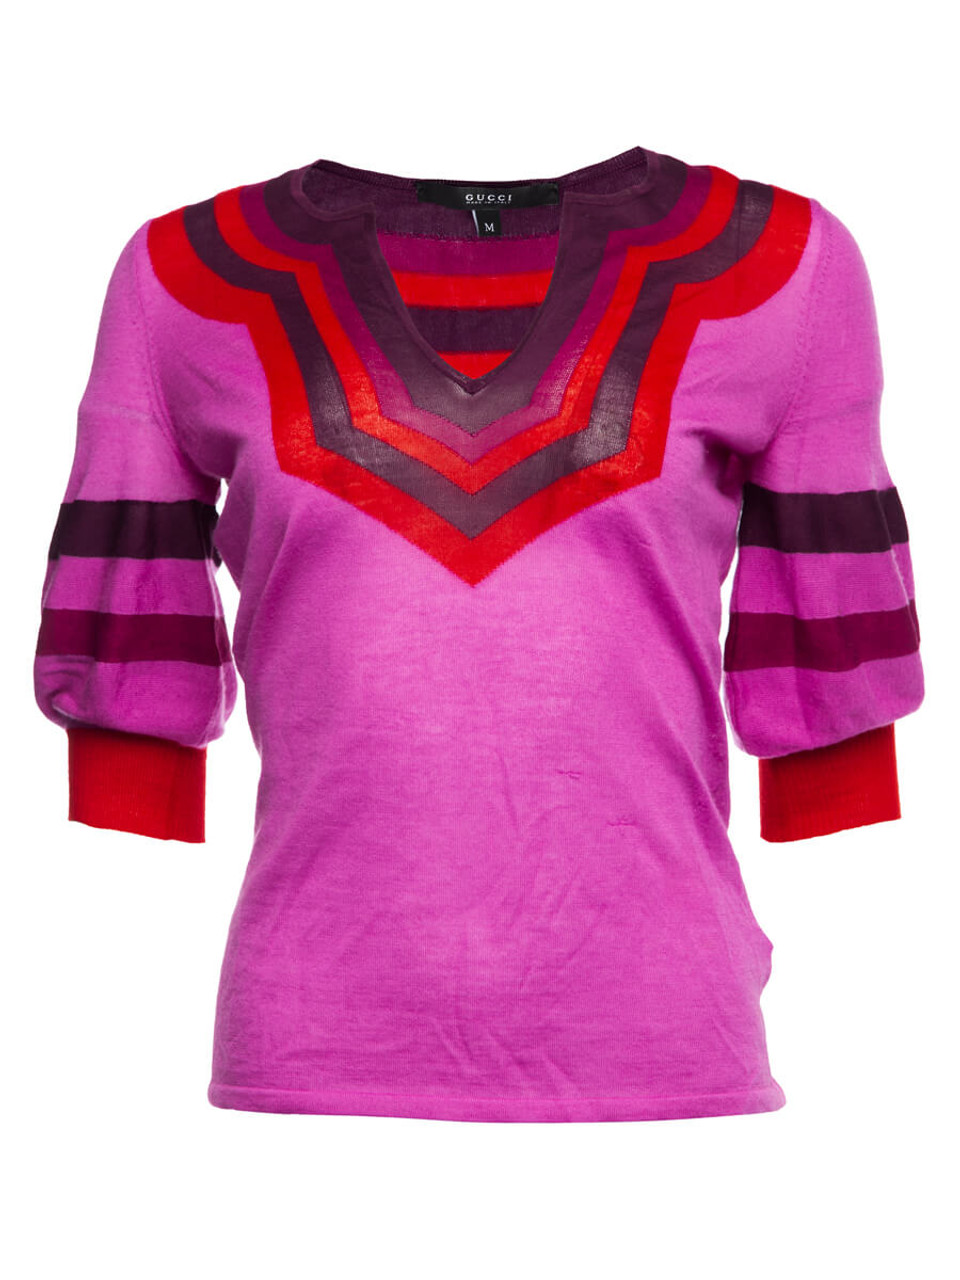 Gucci Women's Pattern Knit Top, Size 10 UK, Pink, Cashmere